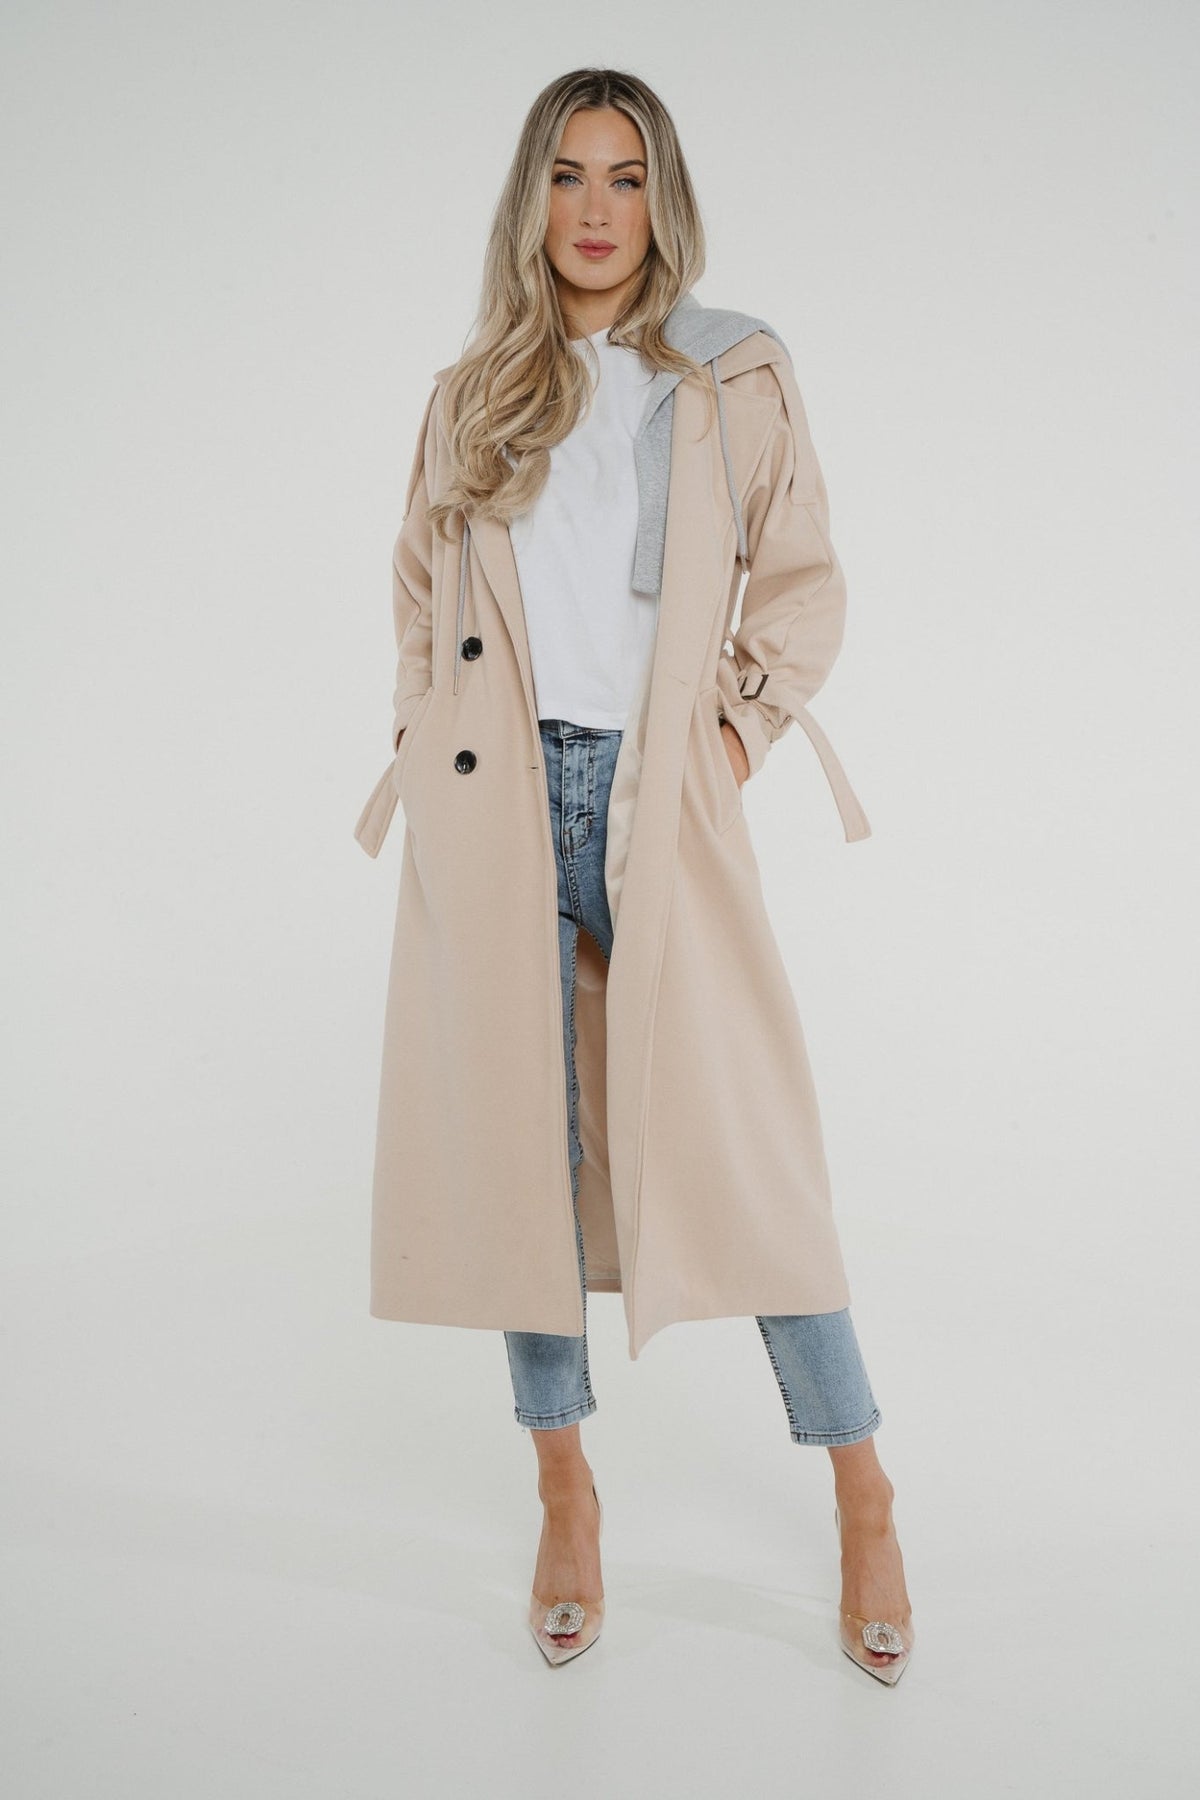 Kelly Layered Hooded Coat In Neutral - The Walk in Wardrobe